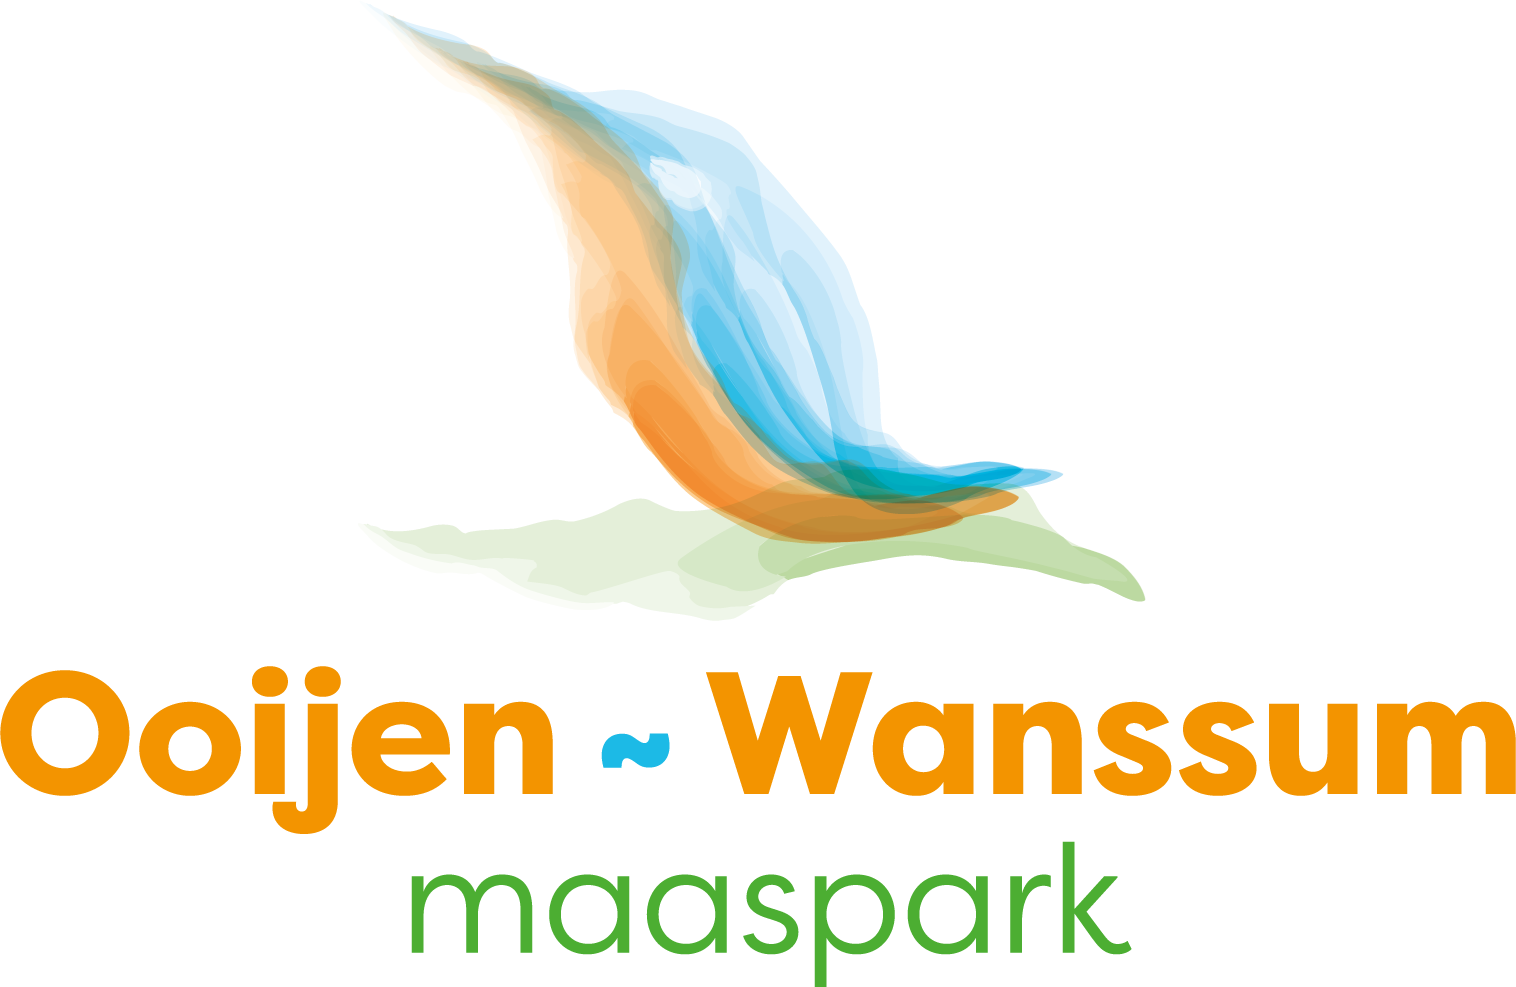 Maaspark Ooijen-Wanssum